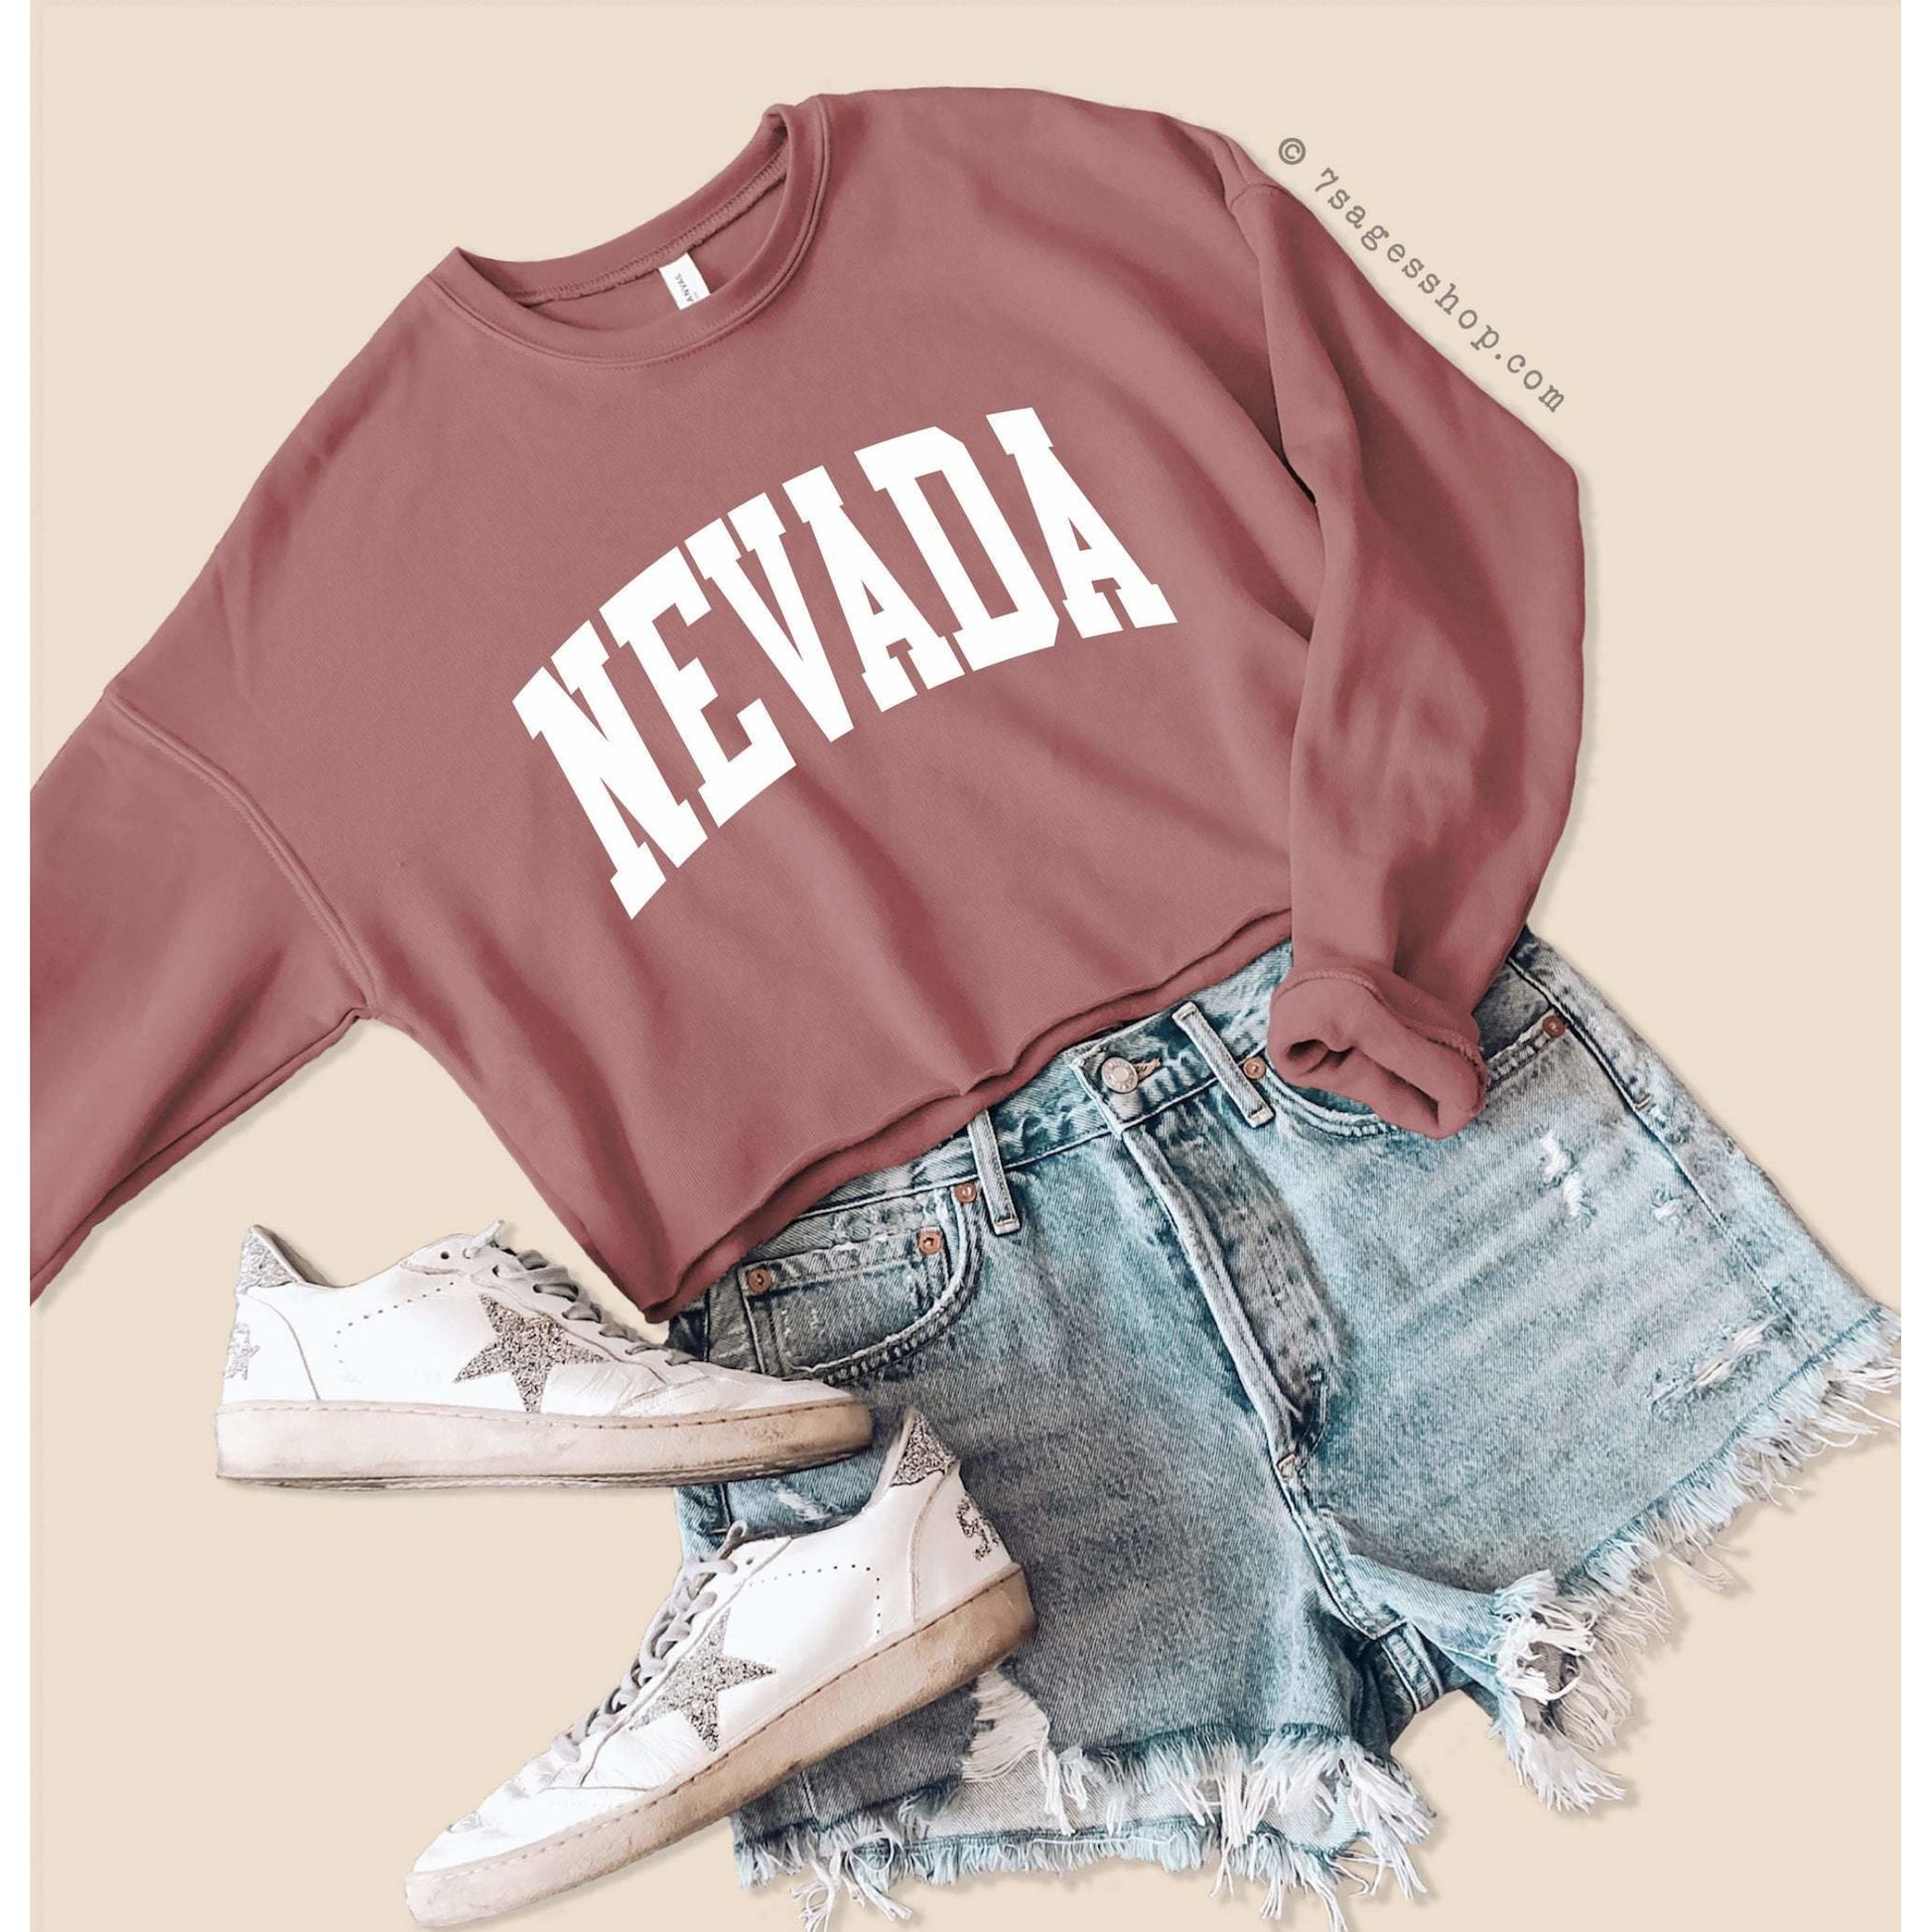 Nevada Cropped Sweatshirt - Nevada Sweatshirt - Nevada Shirts - University of Nevada Crop Top - Fleece Sweatshirt